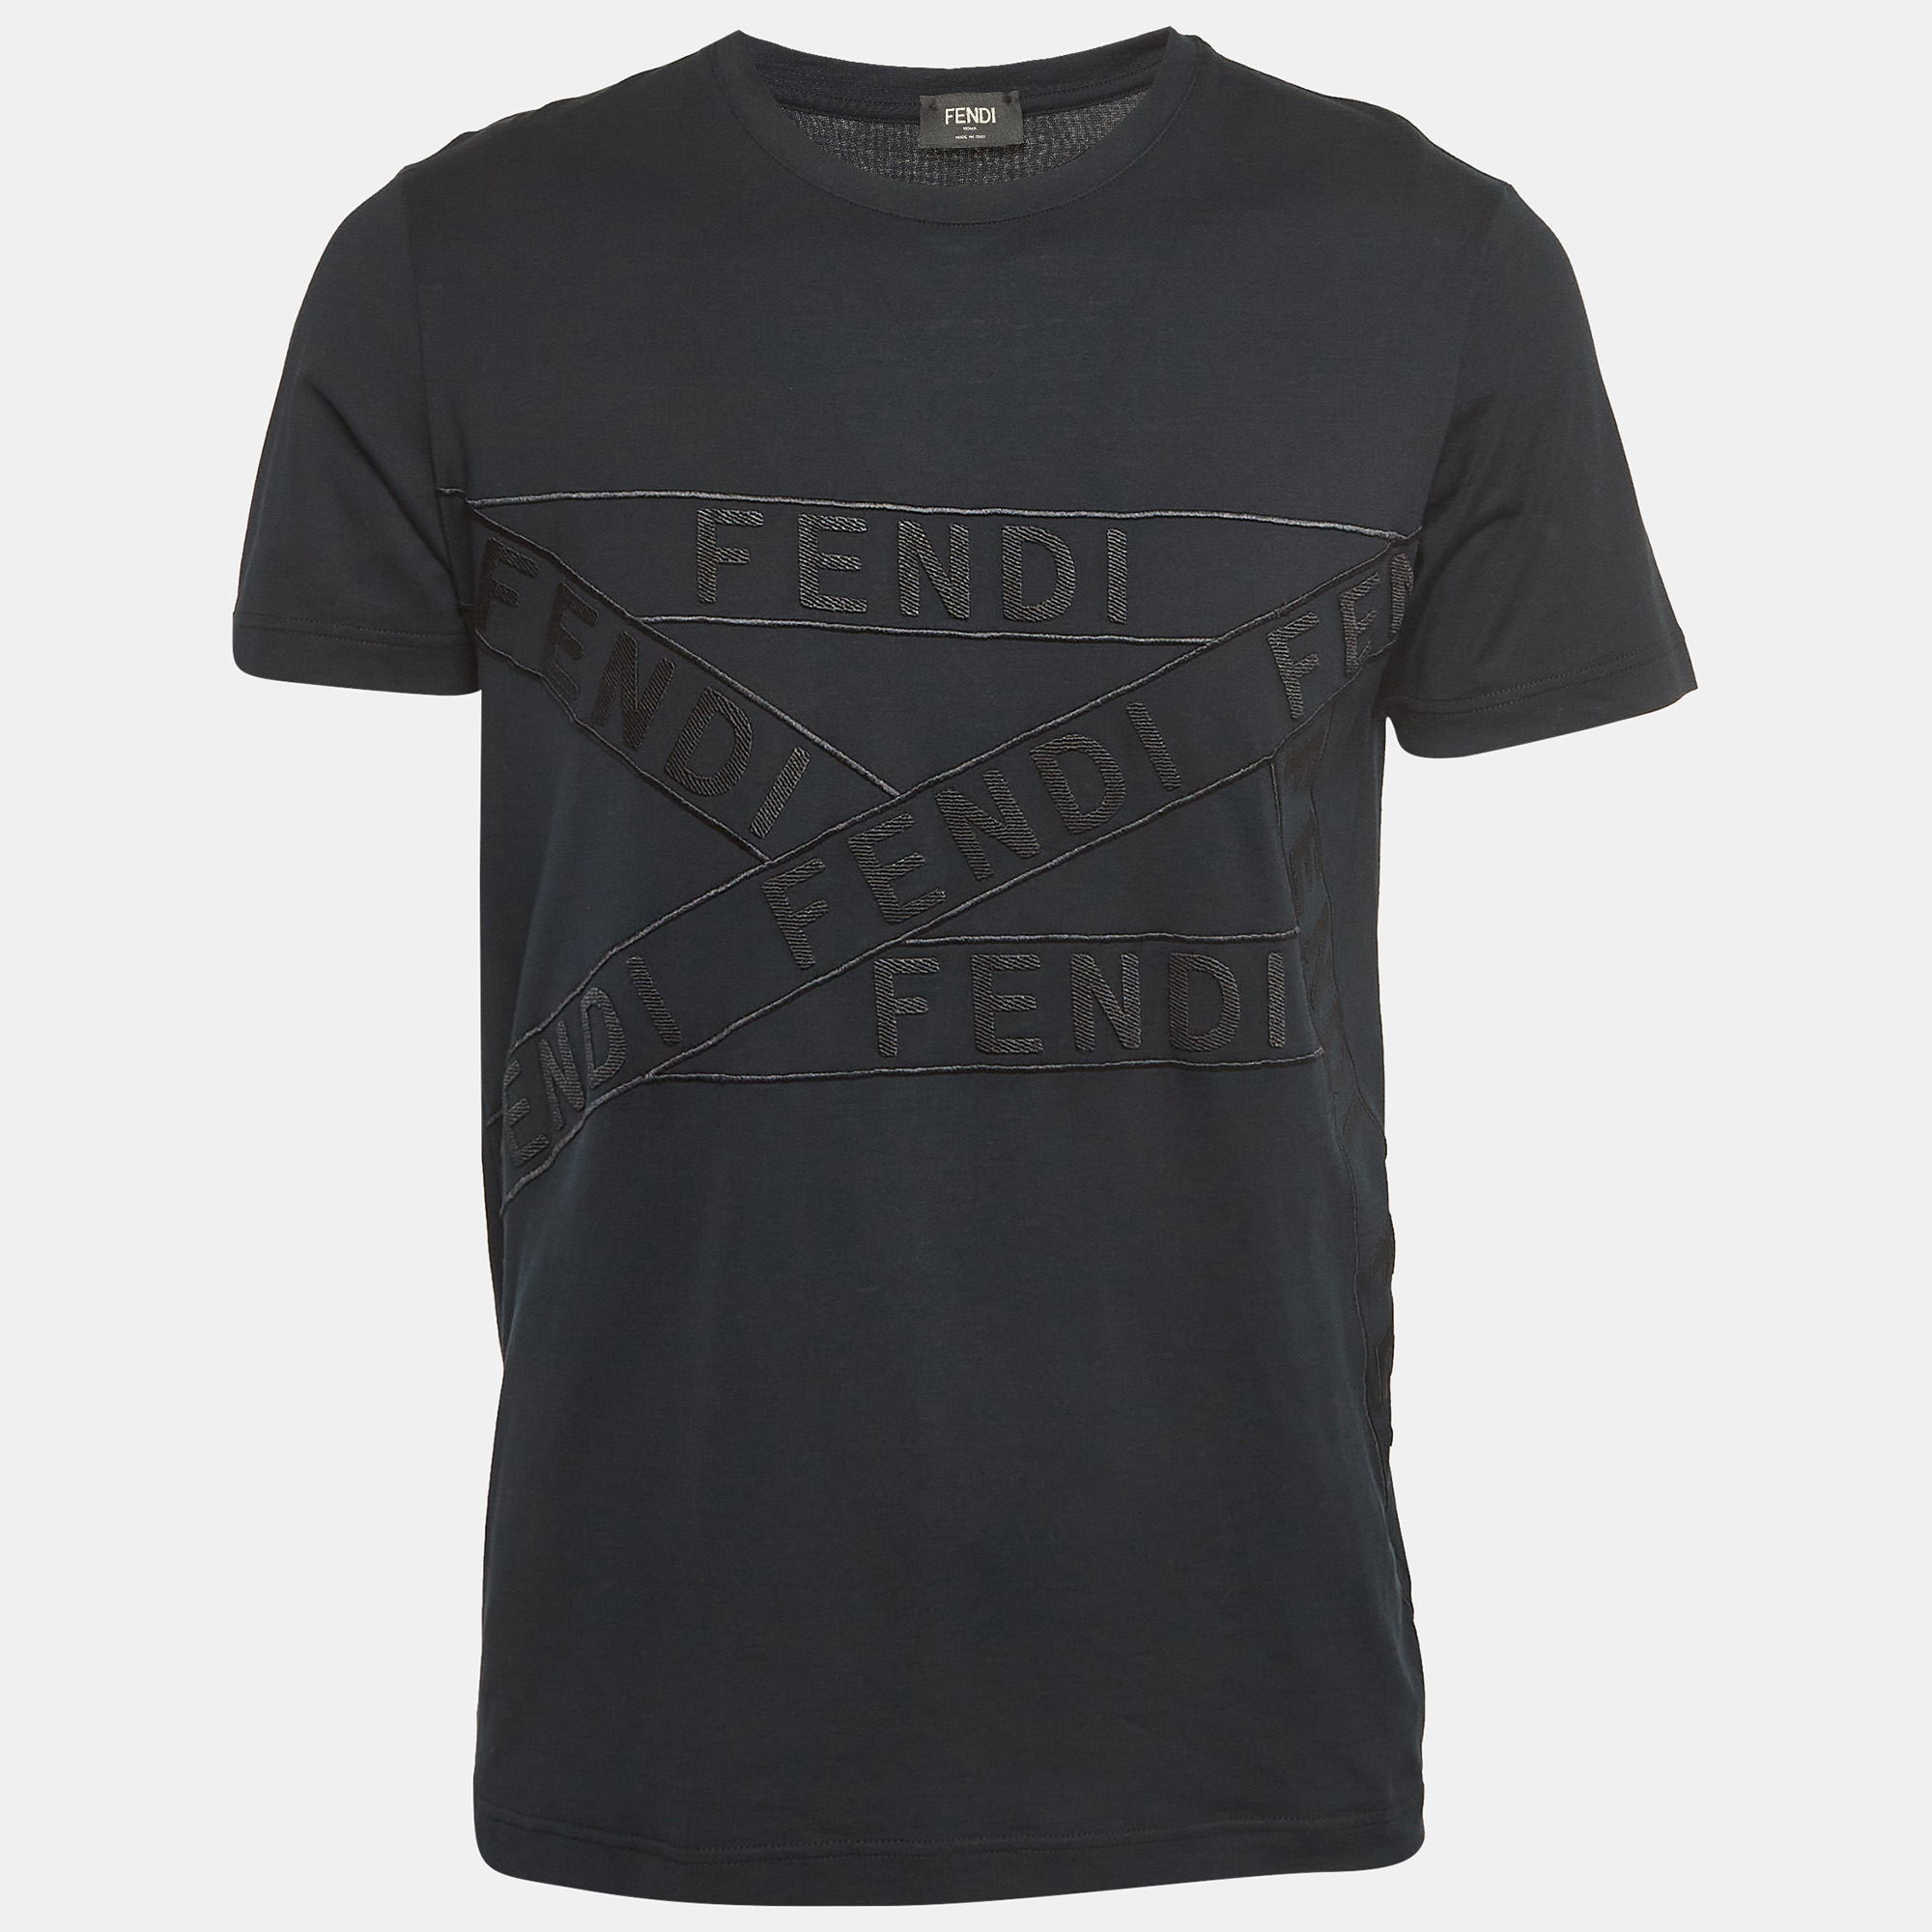 Fendi black logo embroidered cotton jersey t-shirt l